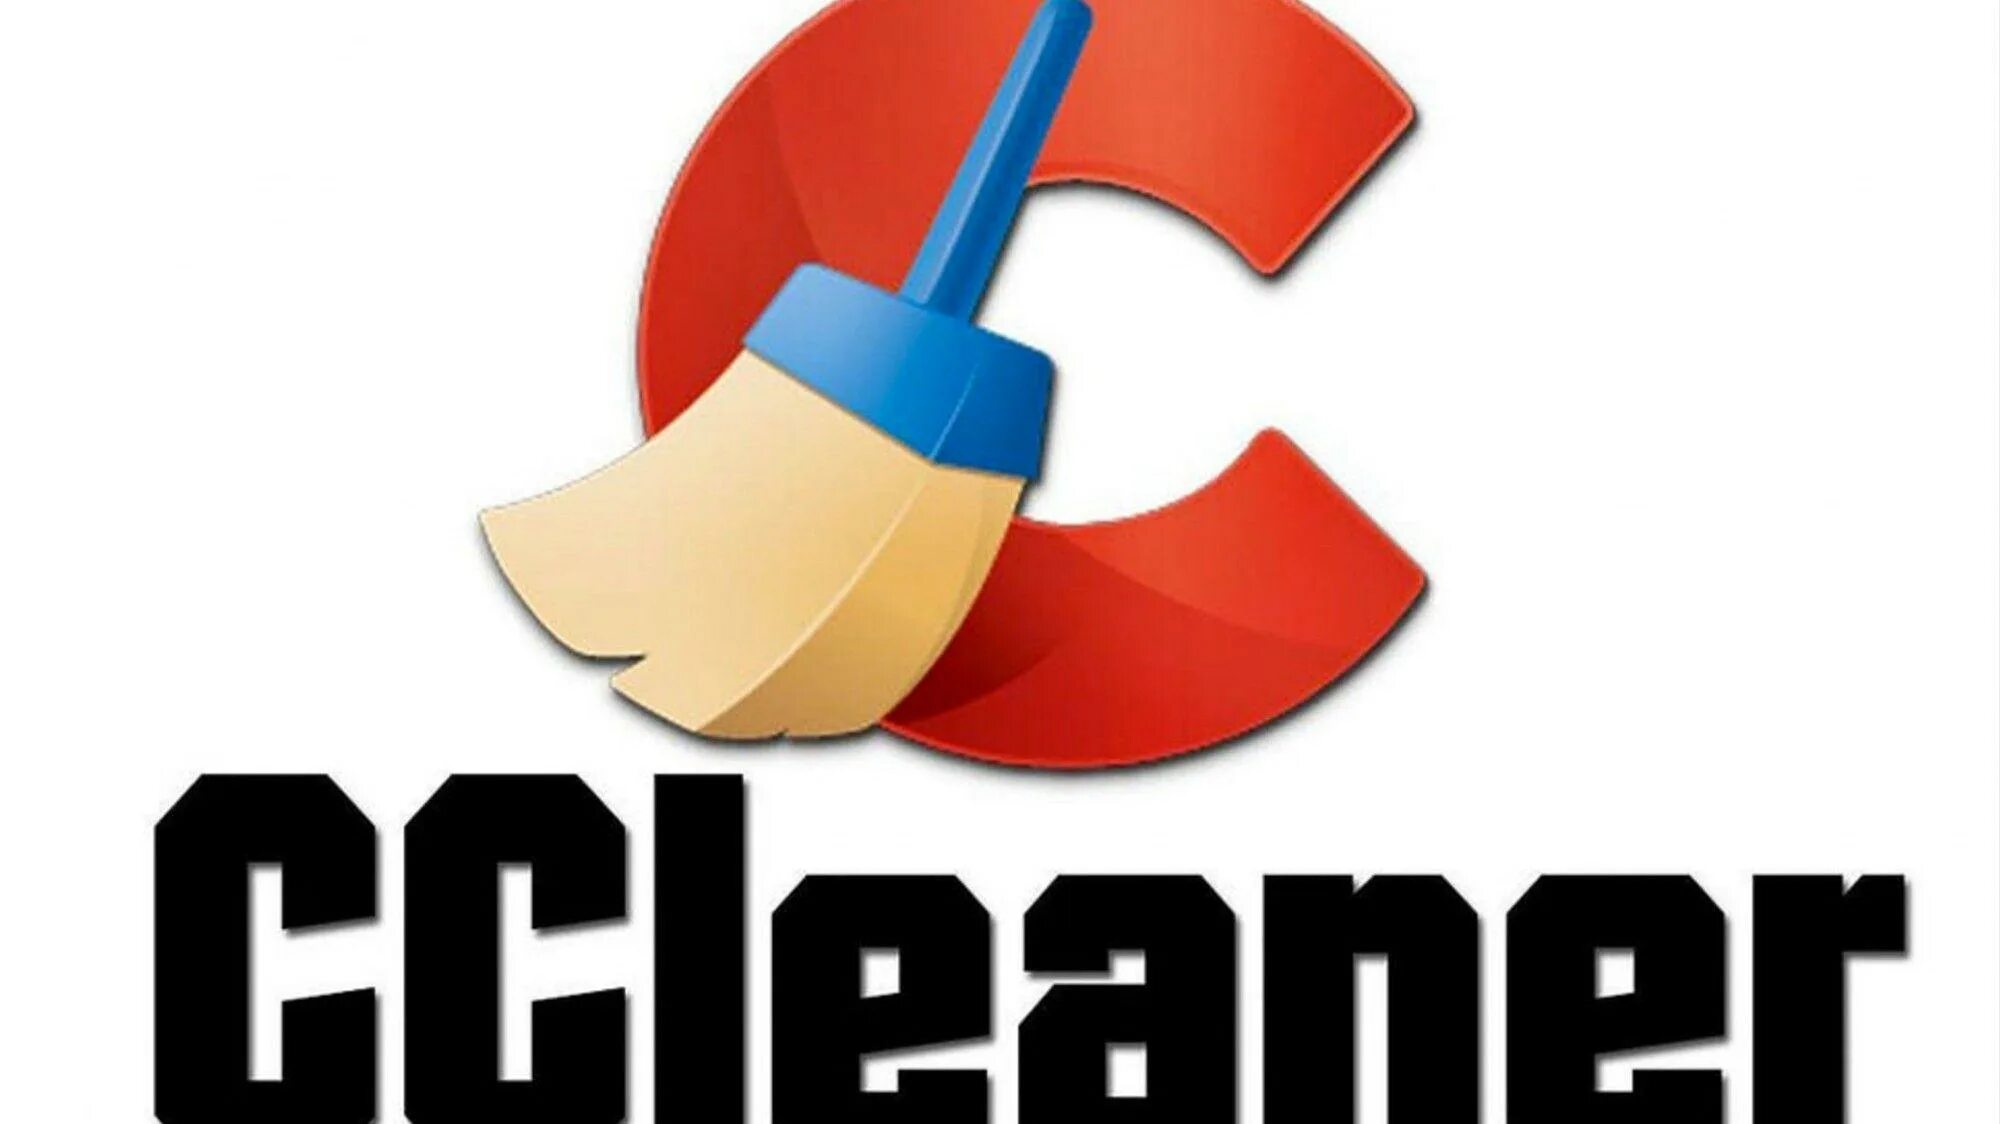 Clean для компьютера. CCLEANER. CCLEANER картинки. CCLEANER лого. CCLEANER Pro.